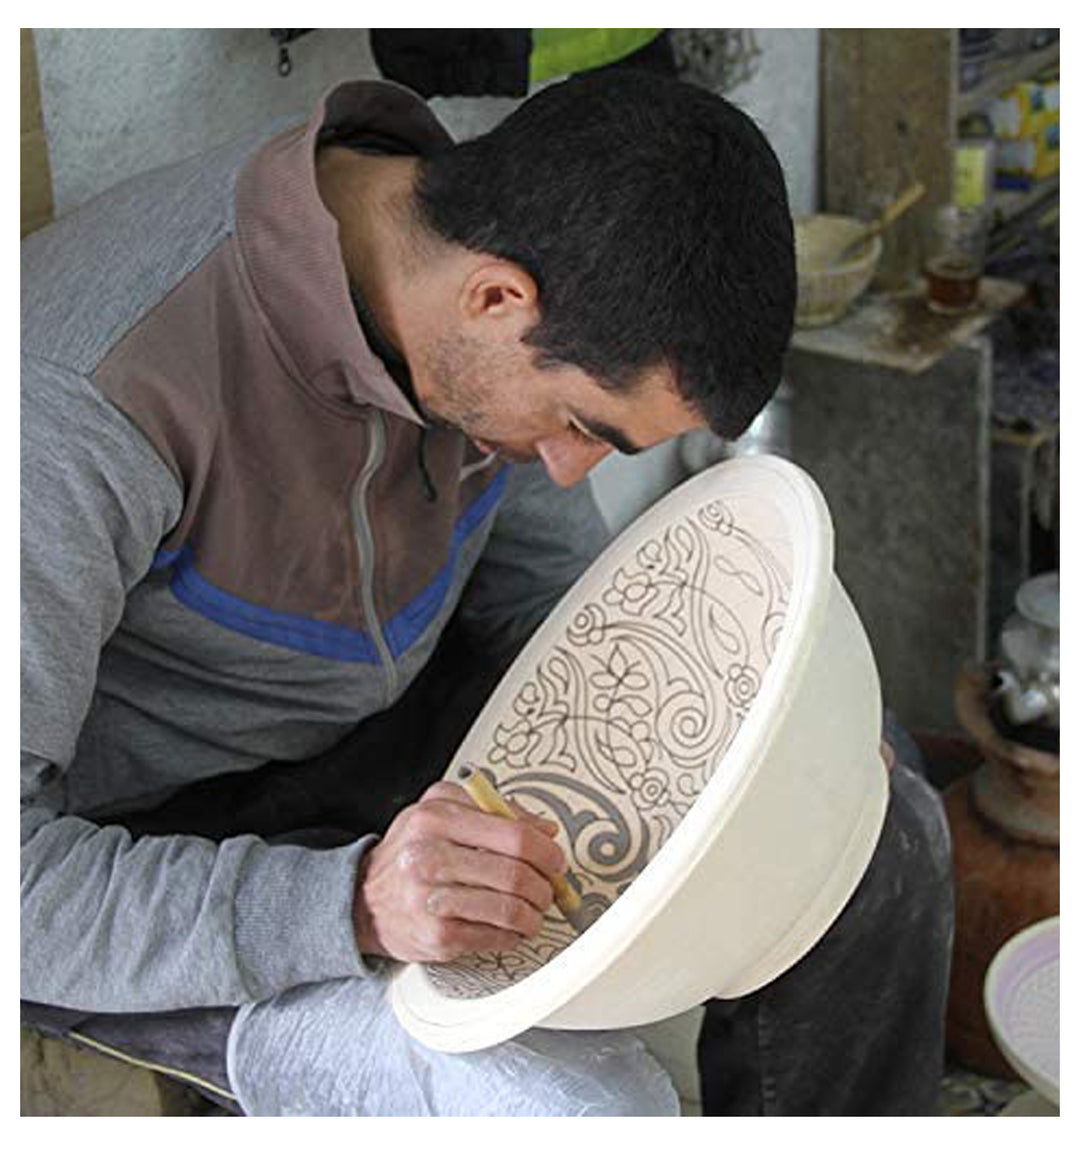 Marokkanisches Keramik-Waschbecken Fes124